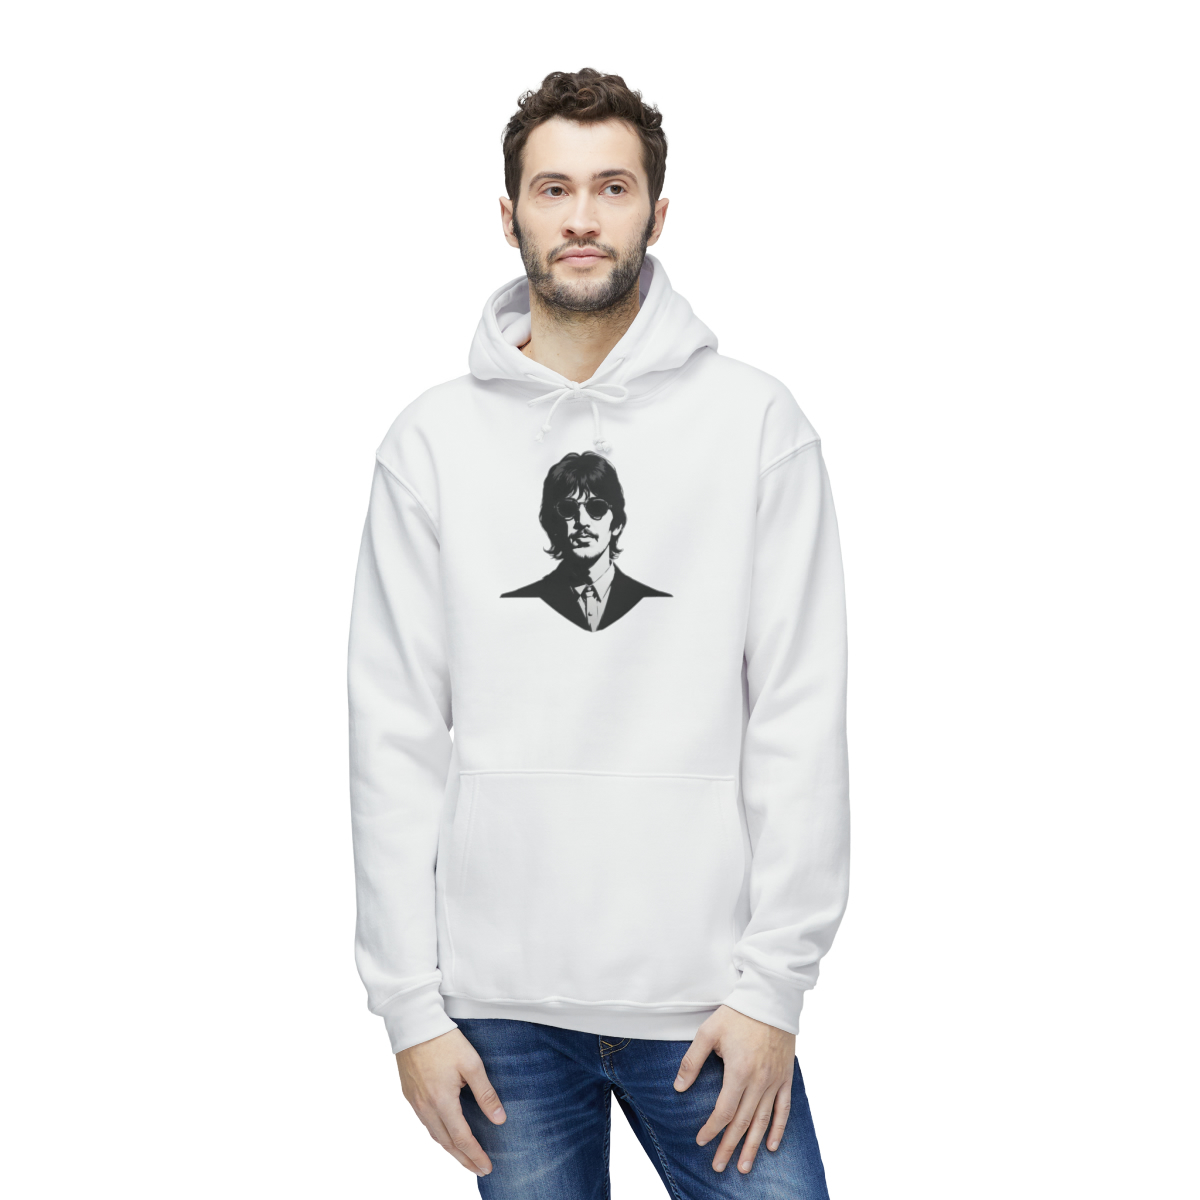 Ringo Starr Hooded Sweatshirt | Unisex Black Adult Portrait Graphic 80% Cotton | - $93.73 - $139.05